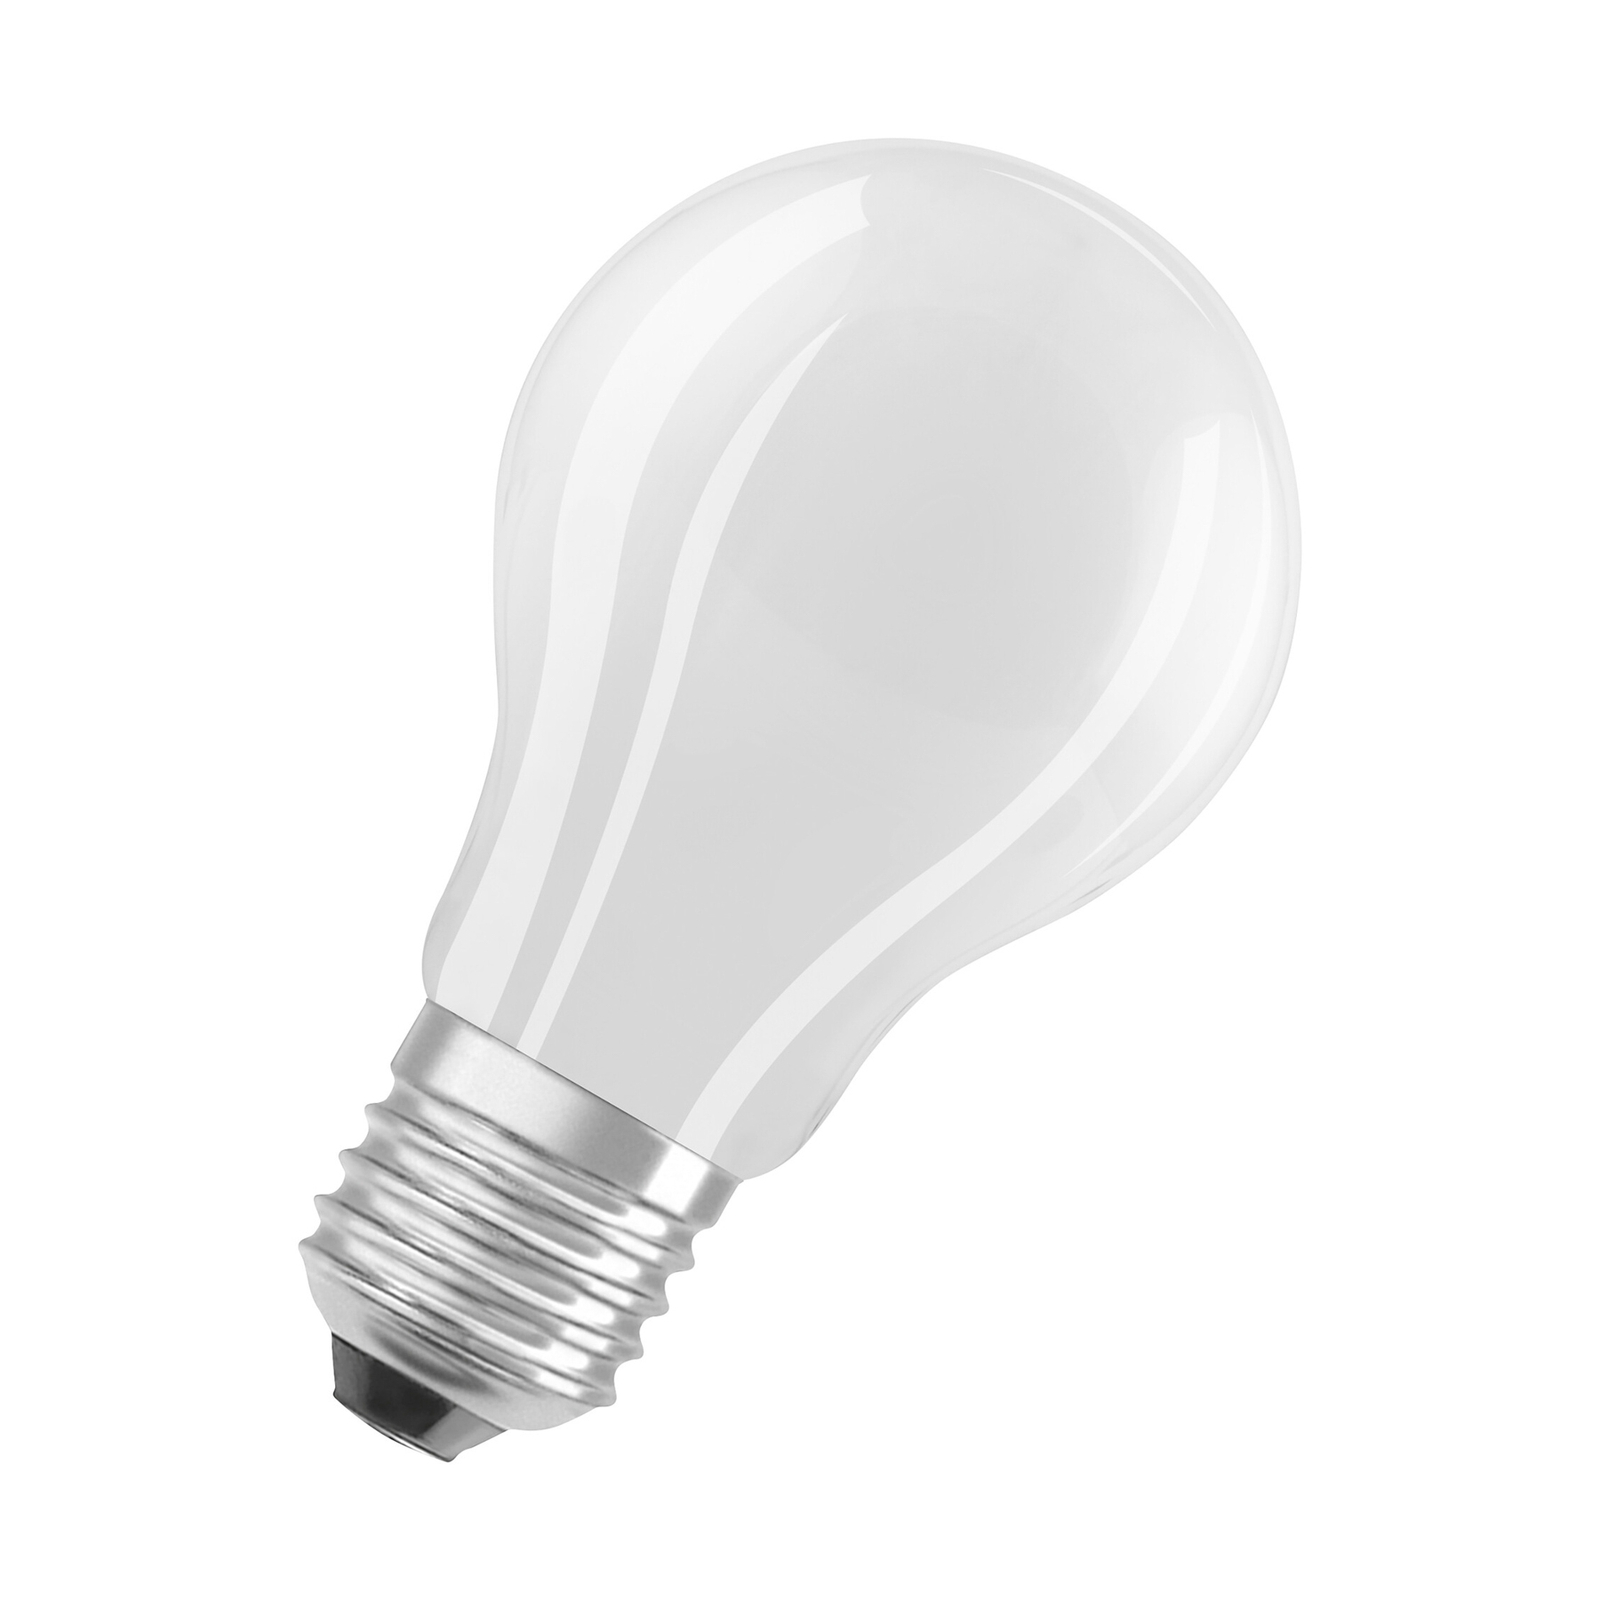 OSRAM LED-Lampe E27 A60 7,2W 1.521lm 3.000K matt